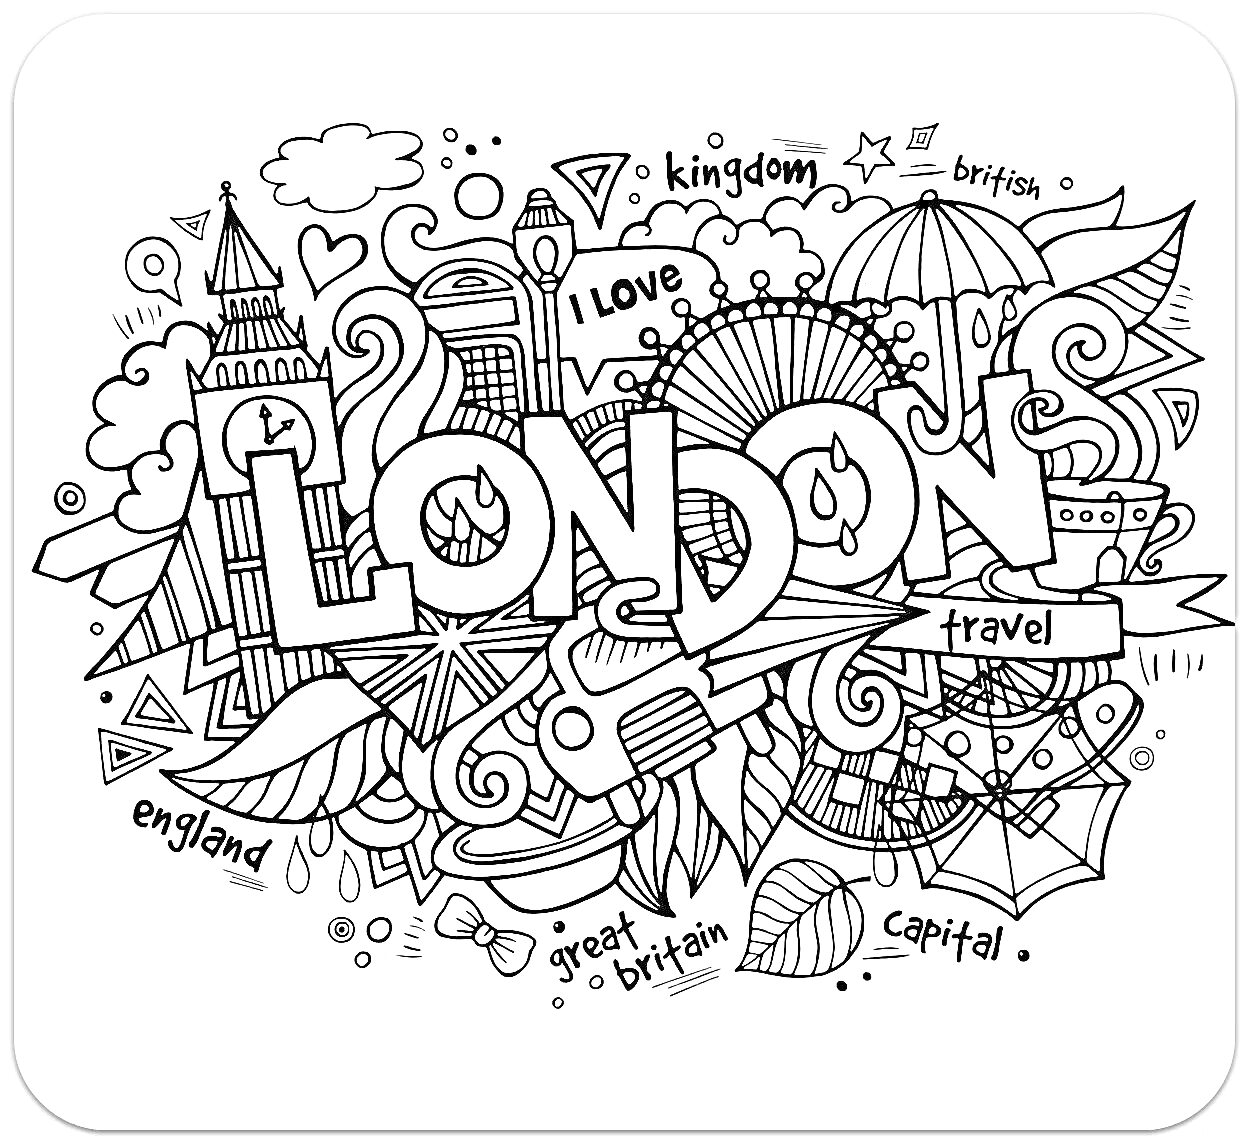 Раскраска London — Big Ben, колесо обозрения, автобус, зонтики, облака, корона, значки, ковбойская шляпа, радуга, звездочки, сердечки, надписи (kingdom, british, england, great britain, capital, travel, i love)